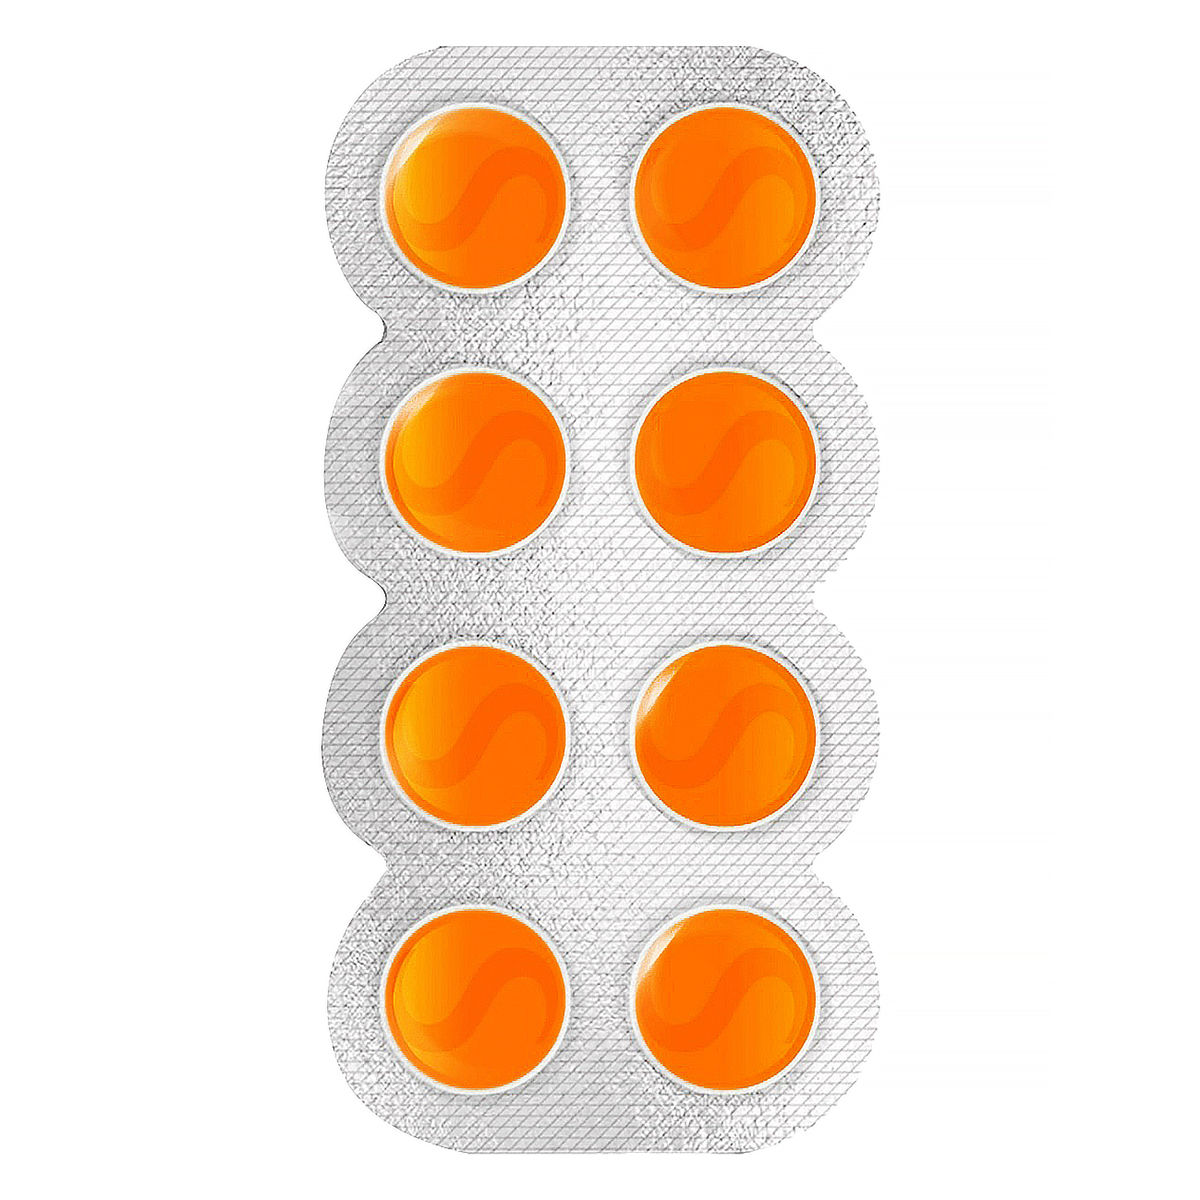 Buy Strepsils Orange Medicated Lozenges for Sore Throat, 8 Count Online